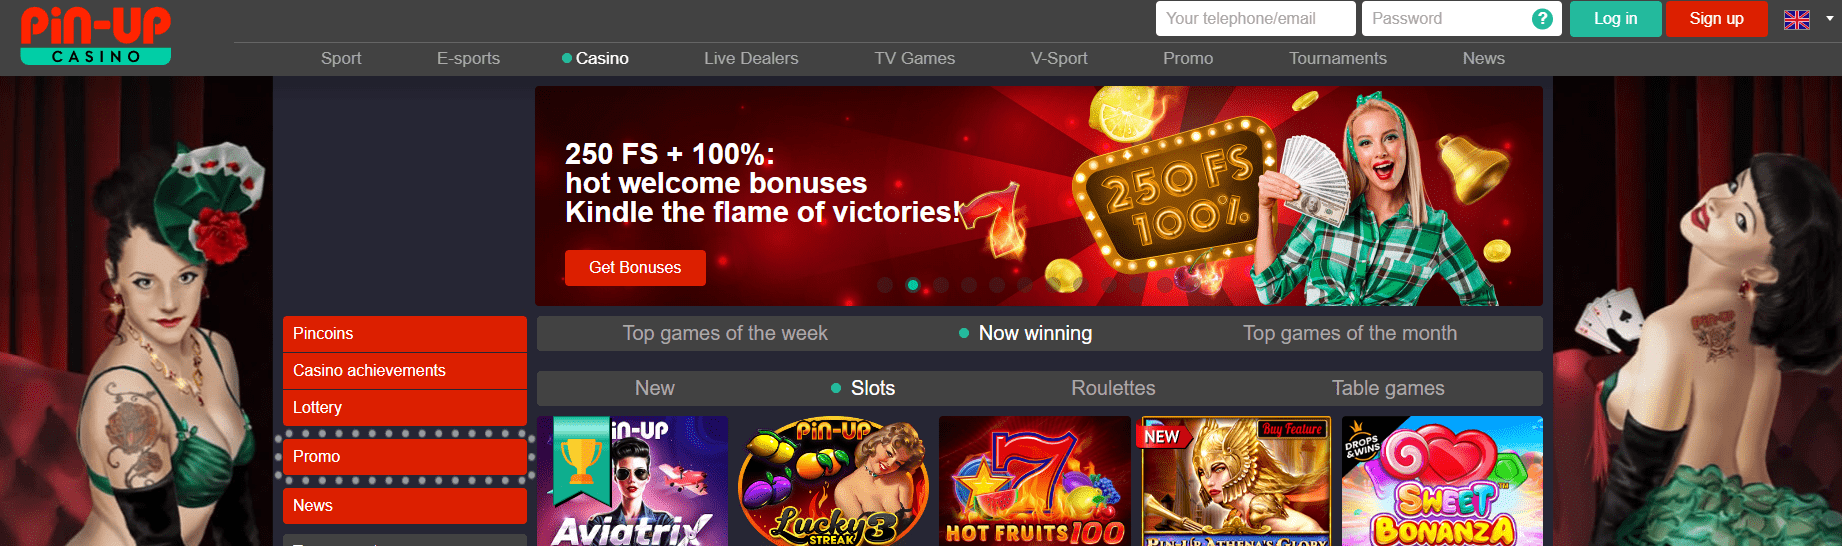 Resmi Pin-Up Casino web sitesi